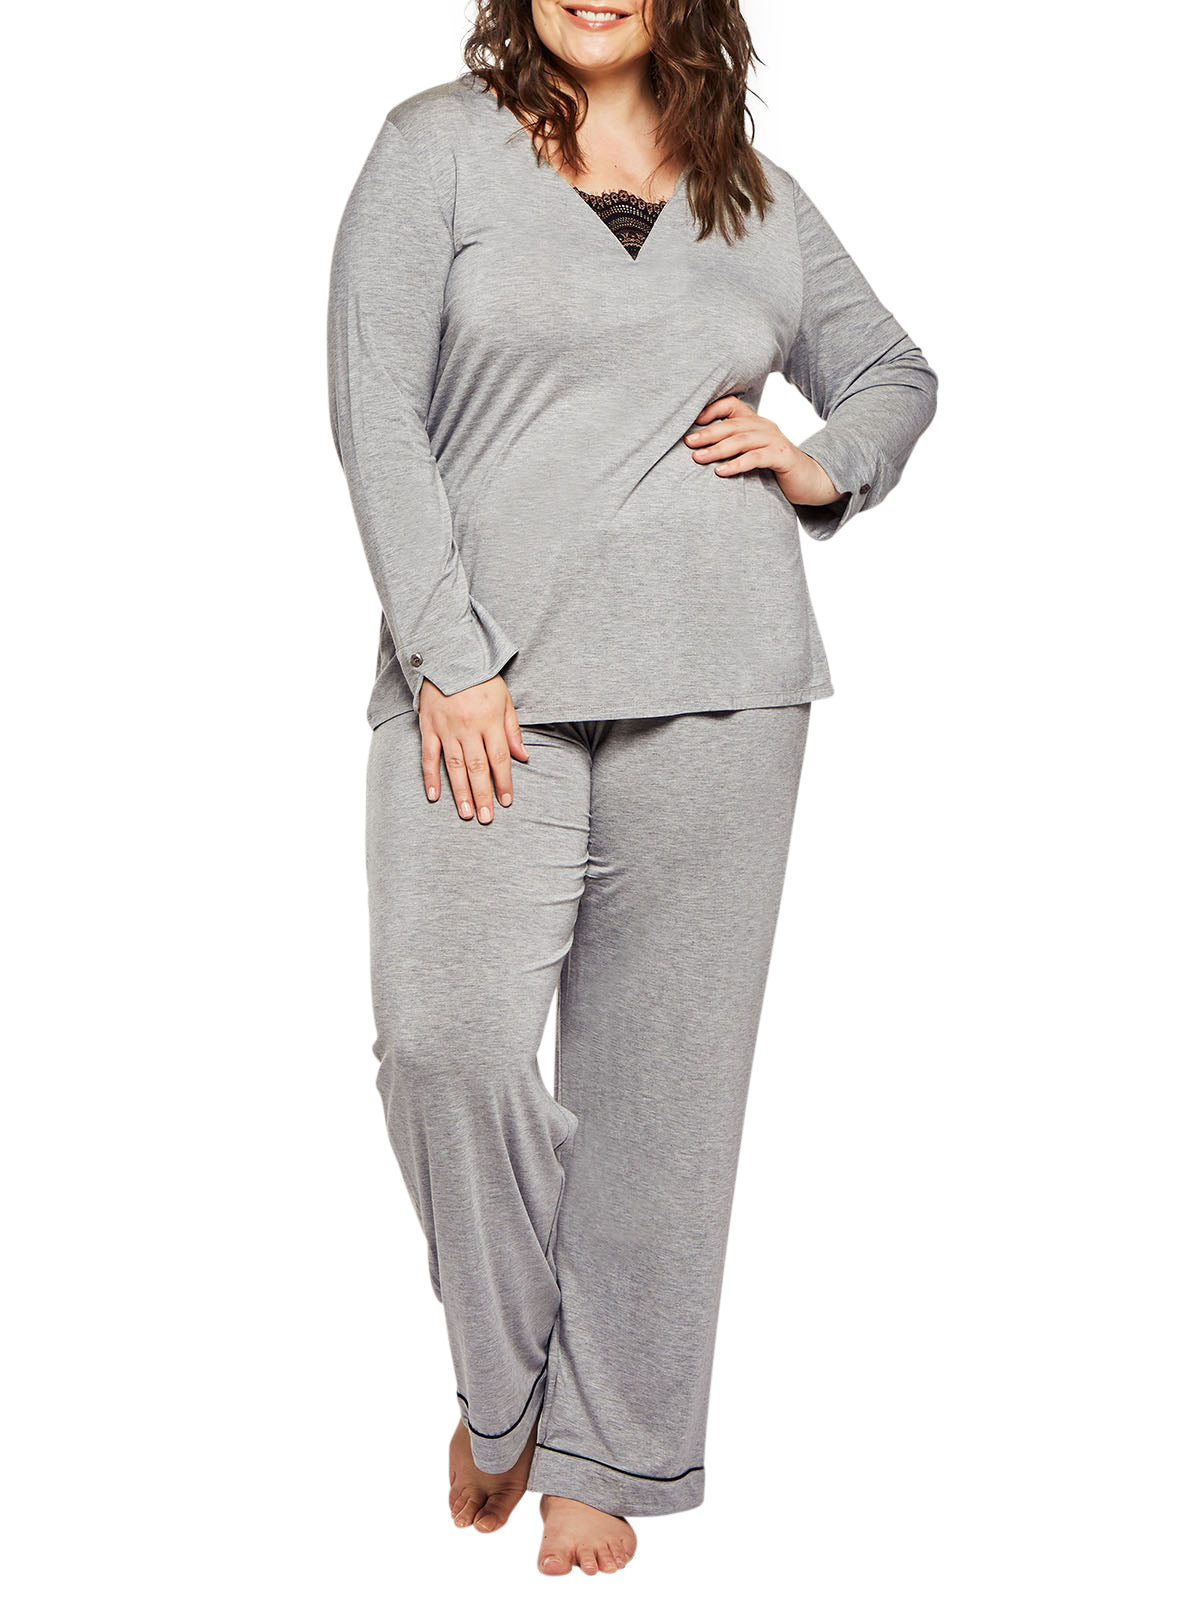 iCollection Rhea Plus Size Pajama Set